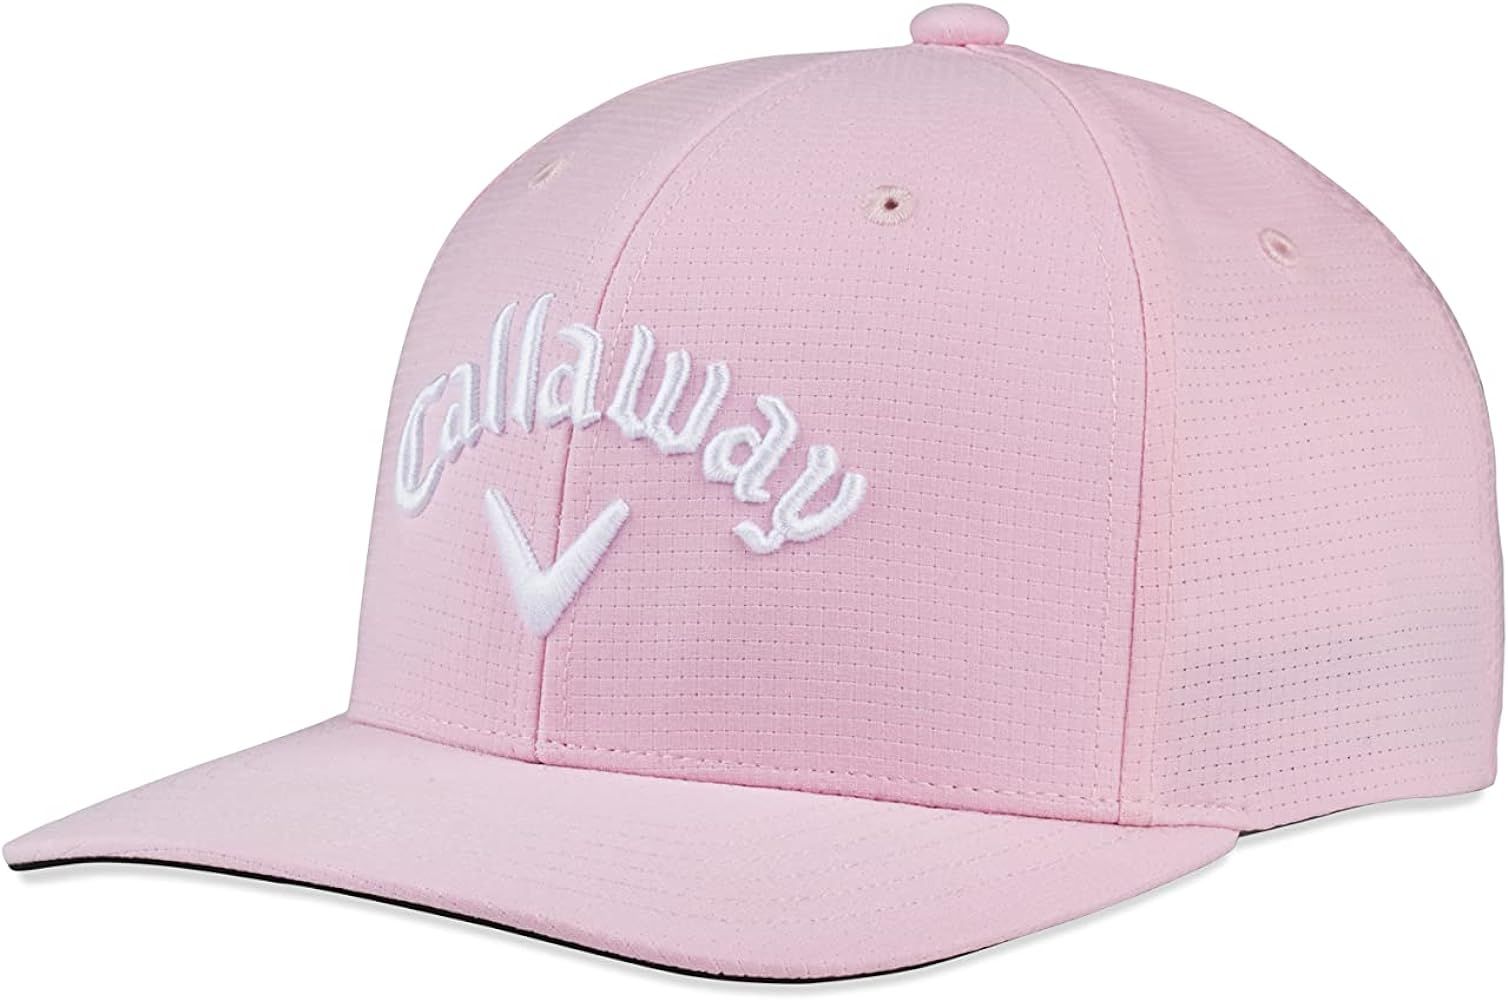 Callaway Golf Performance Pro Tour Cap Collection Headwear | Amazon (US)